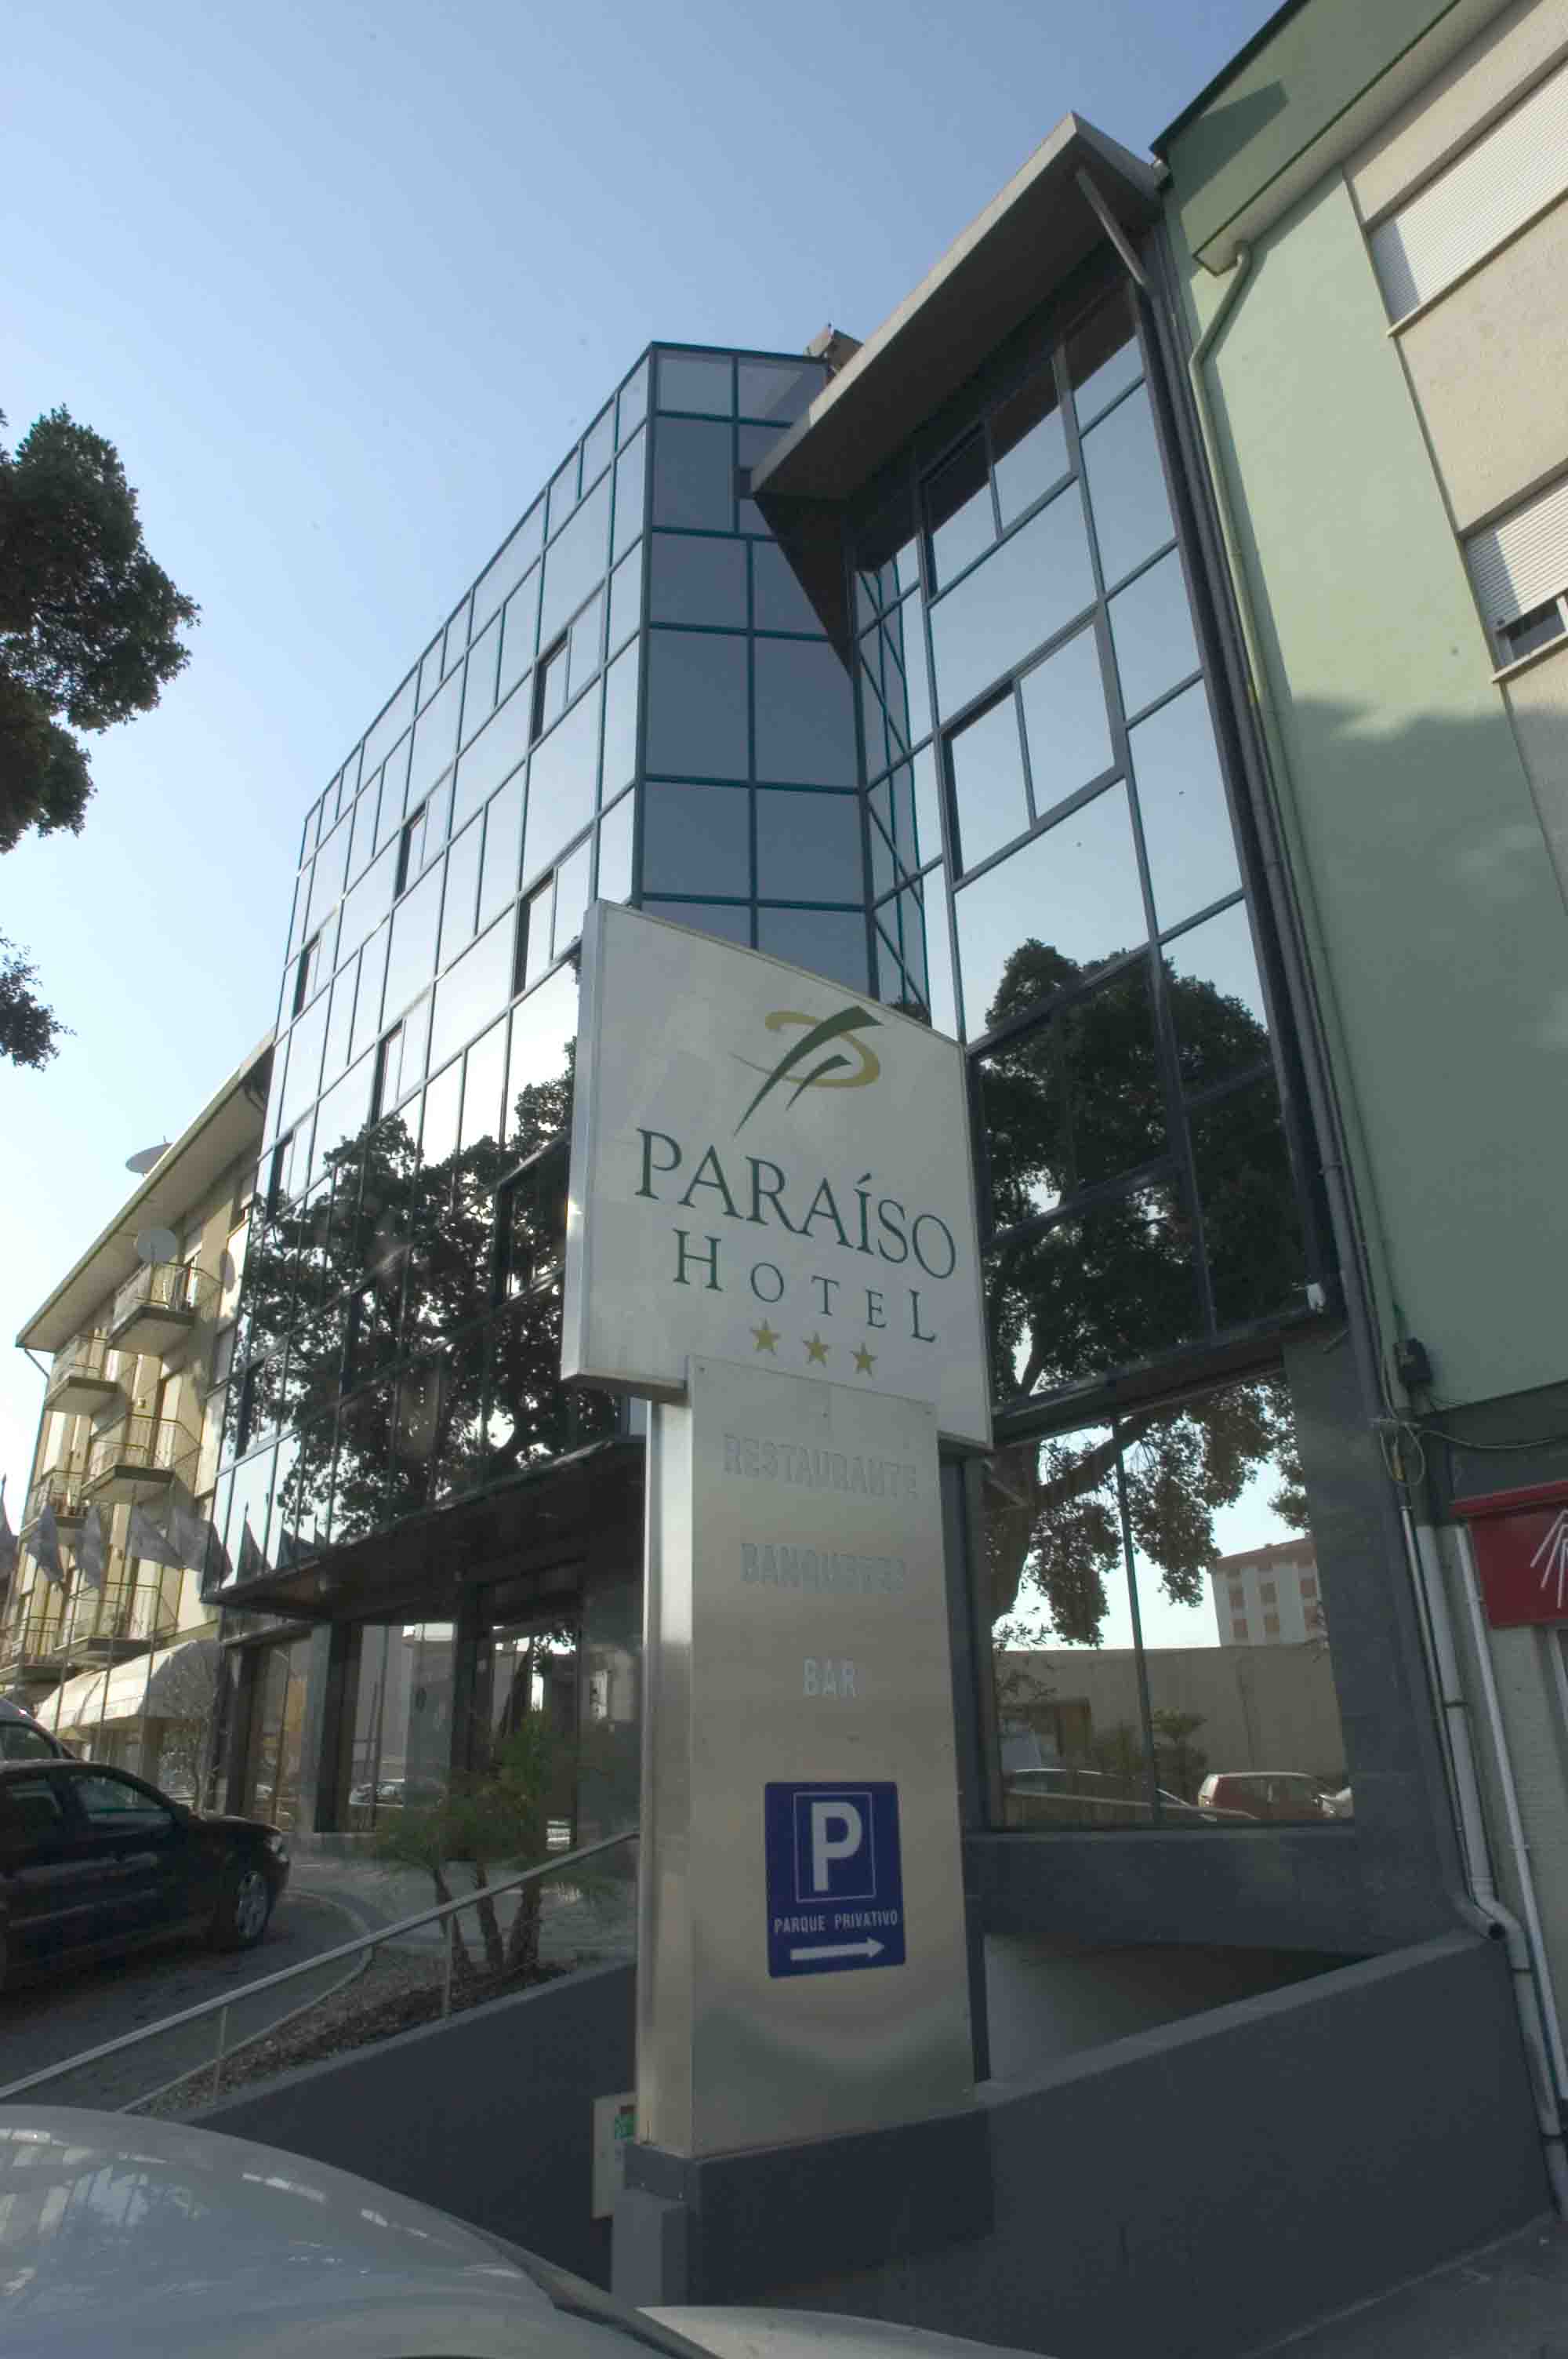 Hotel Paraiso [1966]